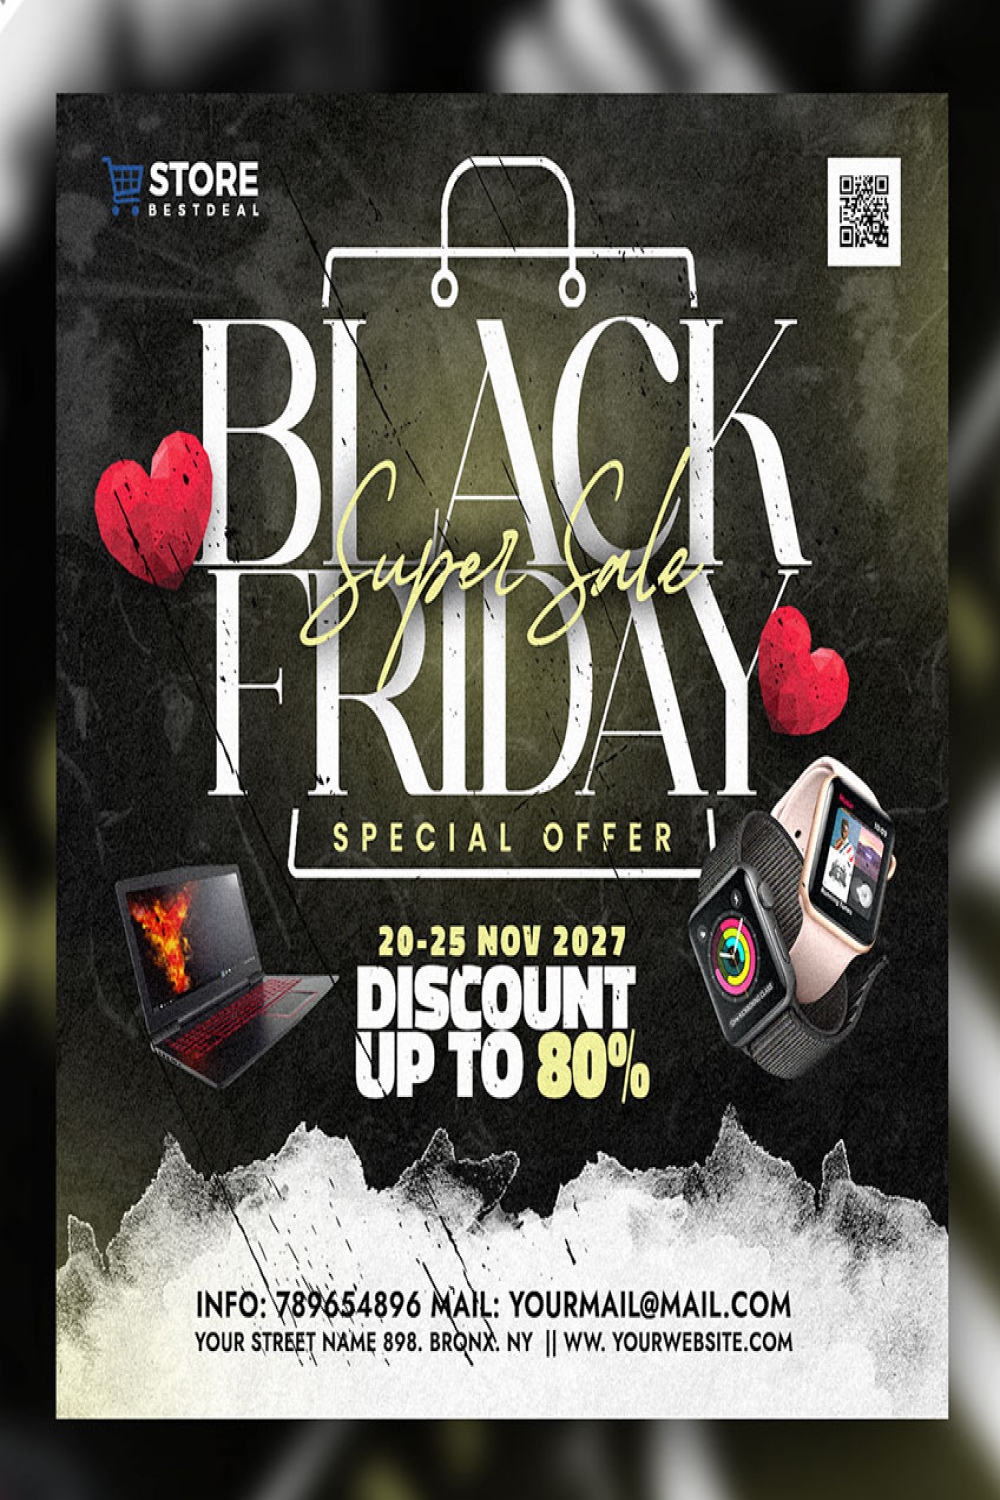 Black Friday Sale Promotion Social Media Post-PSD 1 pinterest preview image.